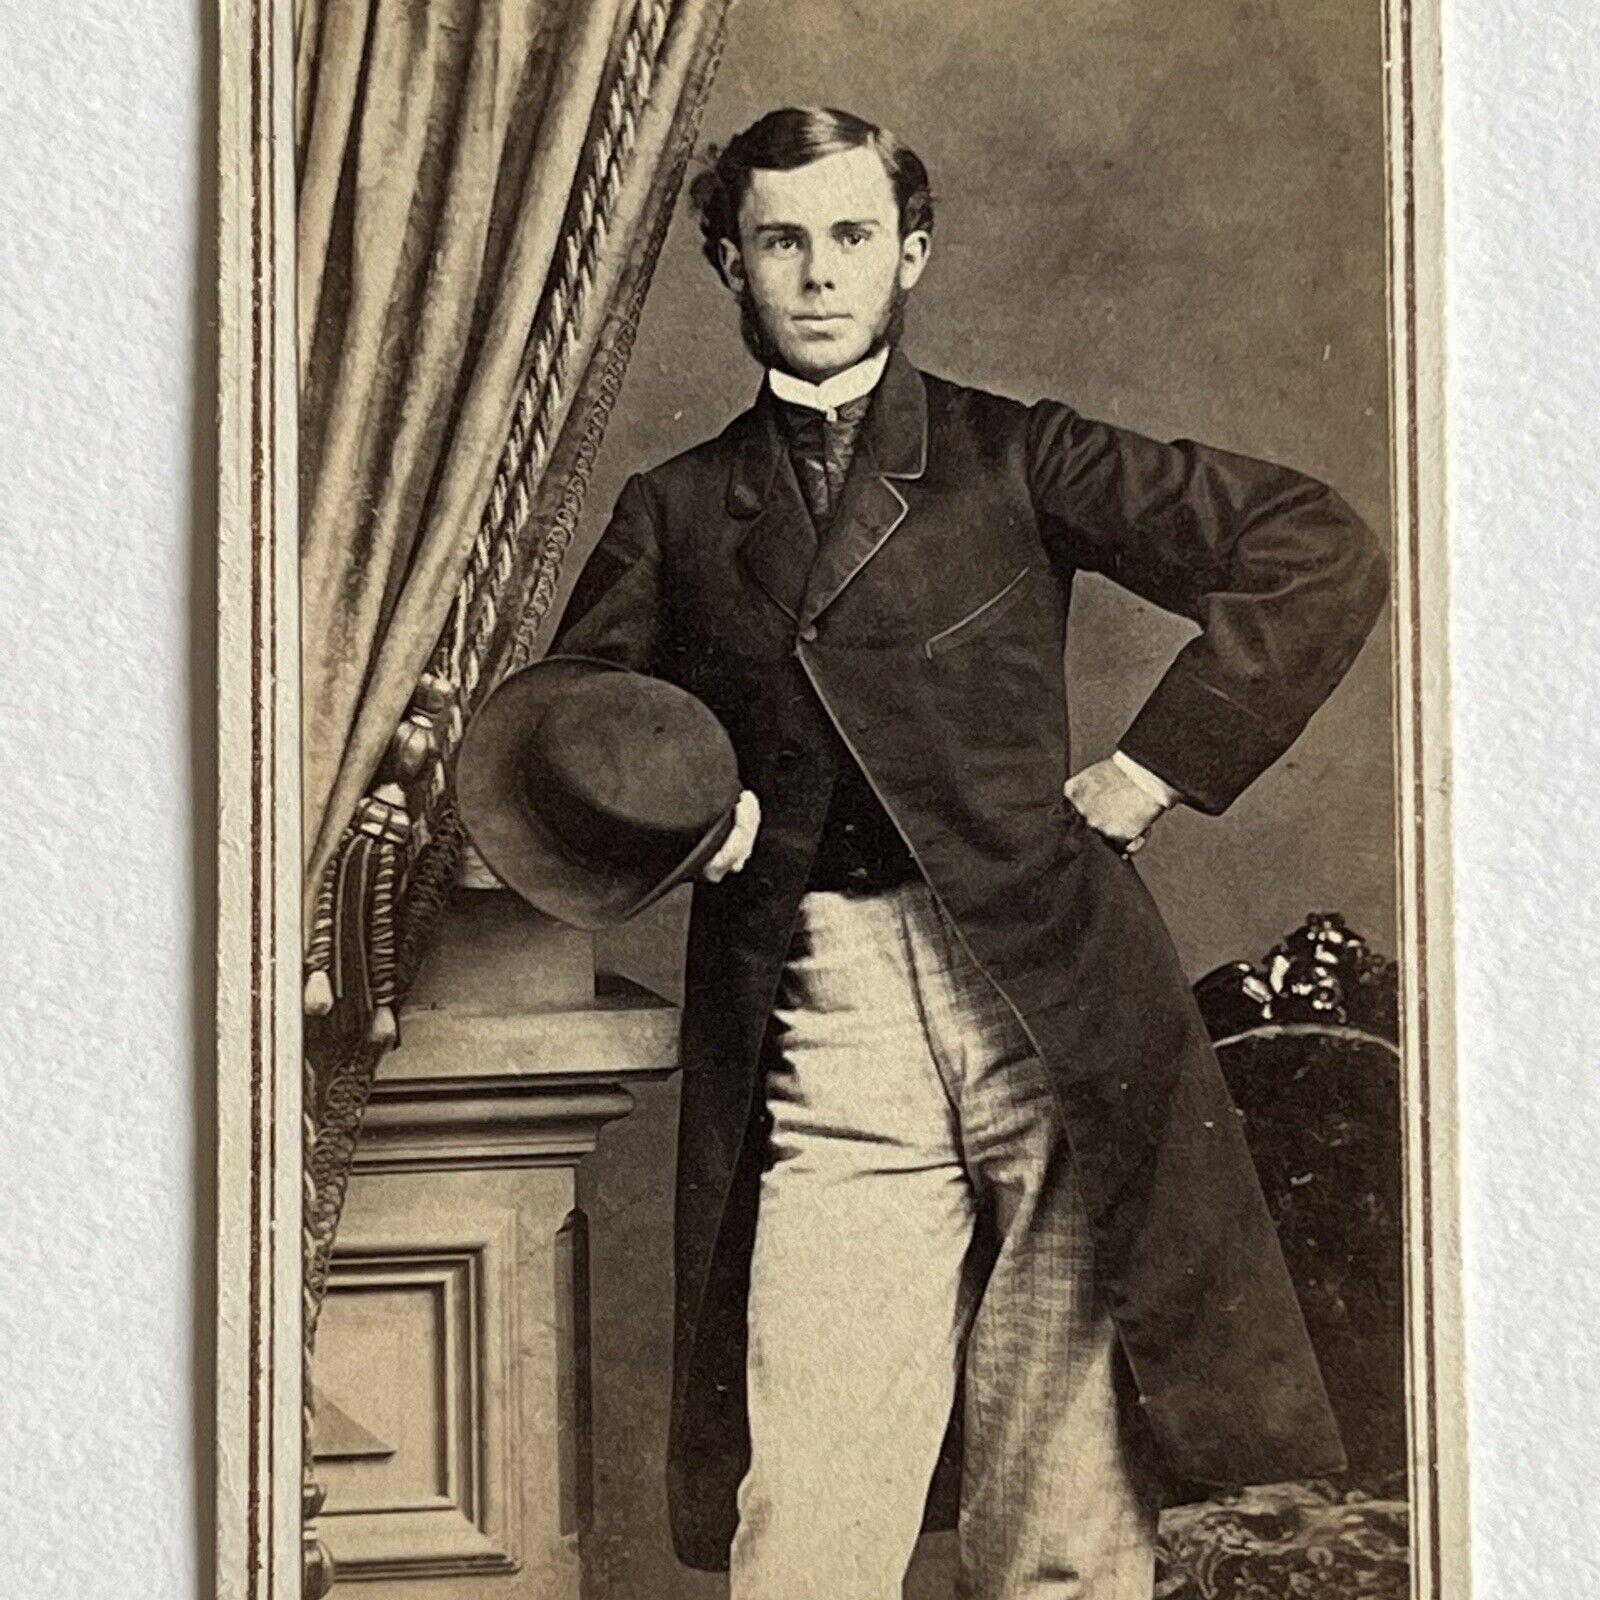 Antique CDV Photograph Handsome Dashing Young Man Mutton Chops Civil War Era